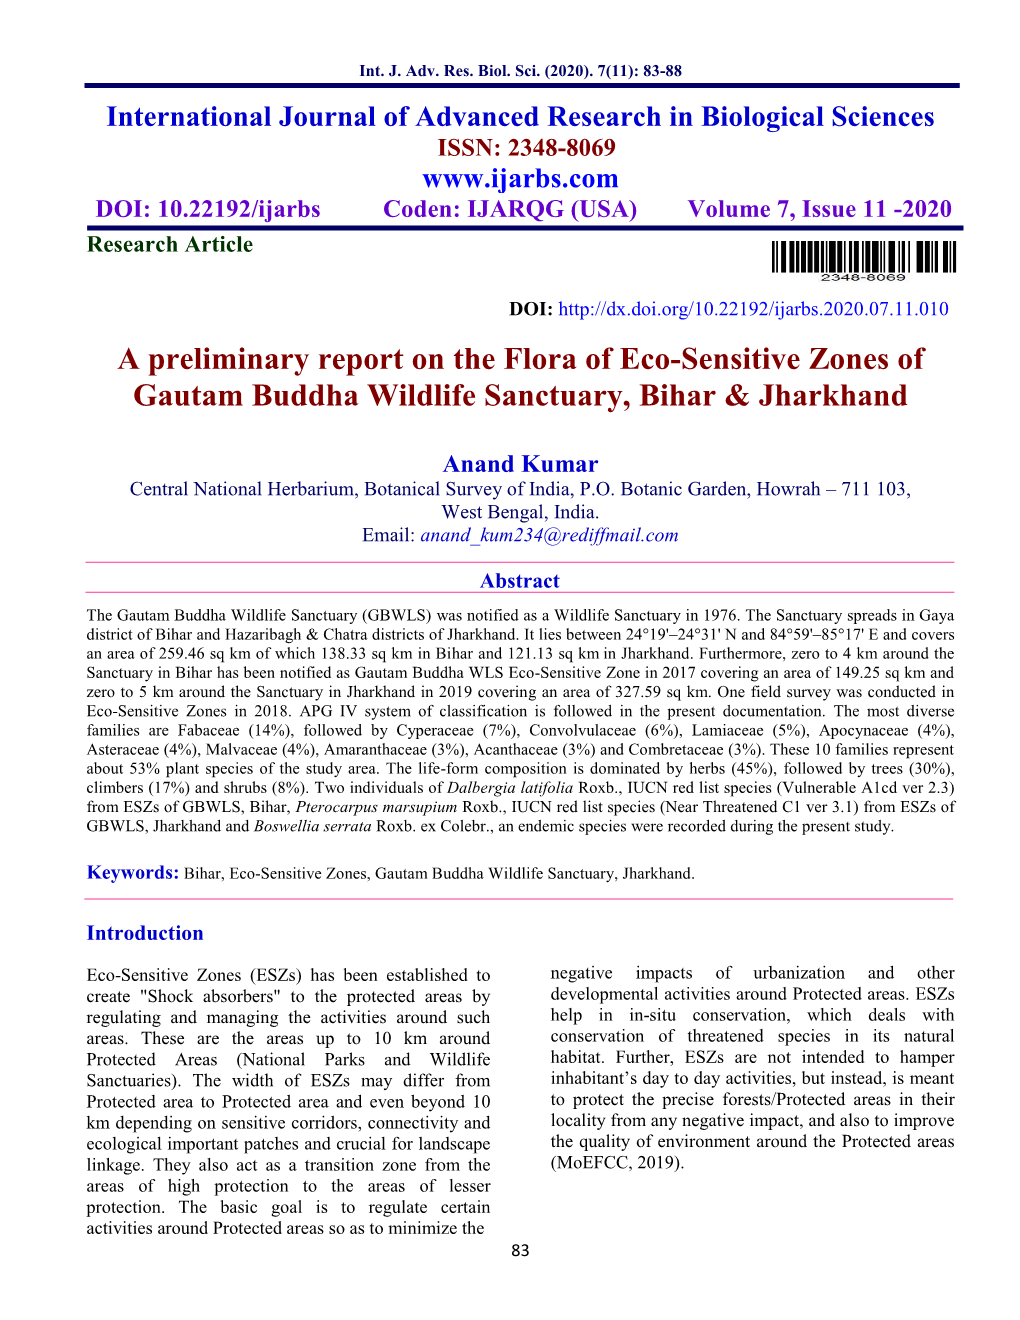 A Preliminary Report on the Flora of Eco-Sensitive Zones of Gautam Buddha Wildlife Sanctuary, Bihar & Jharkhand